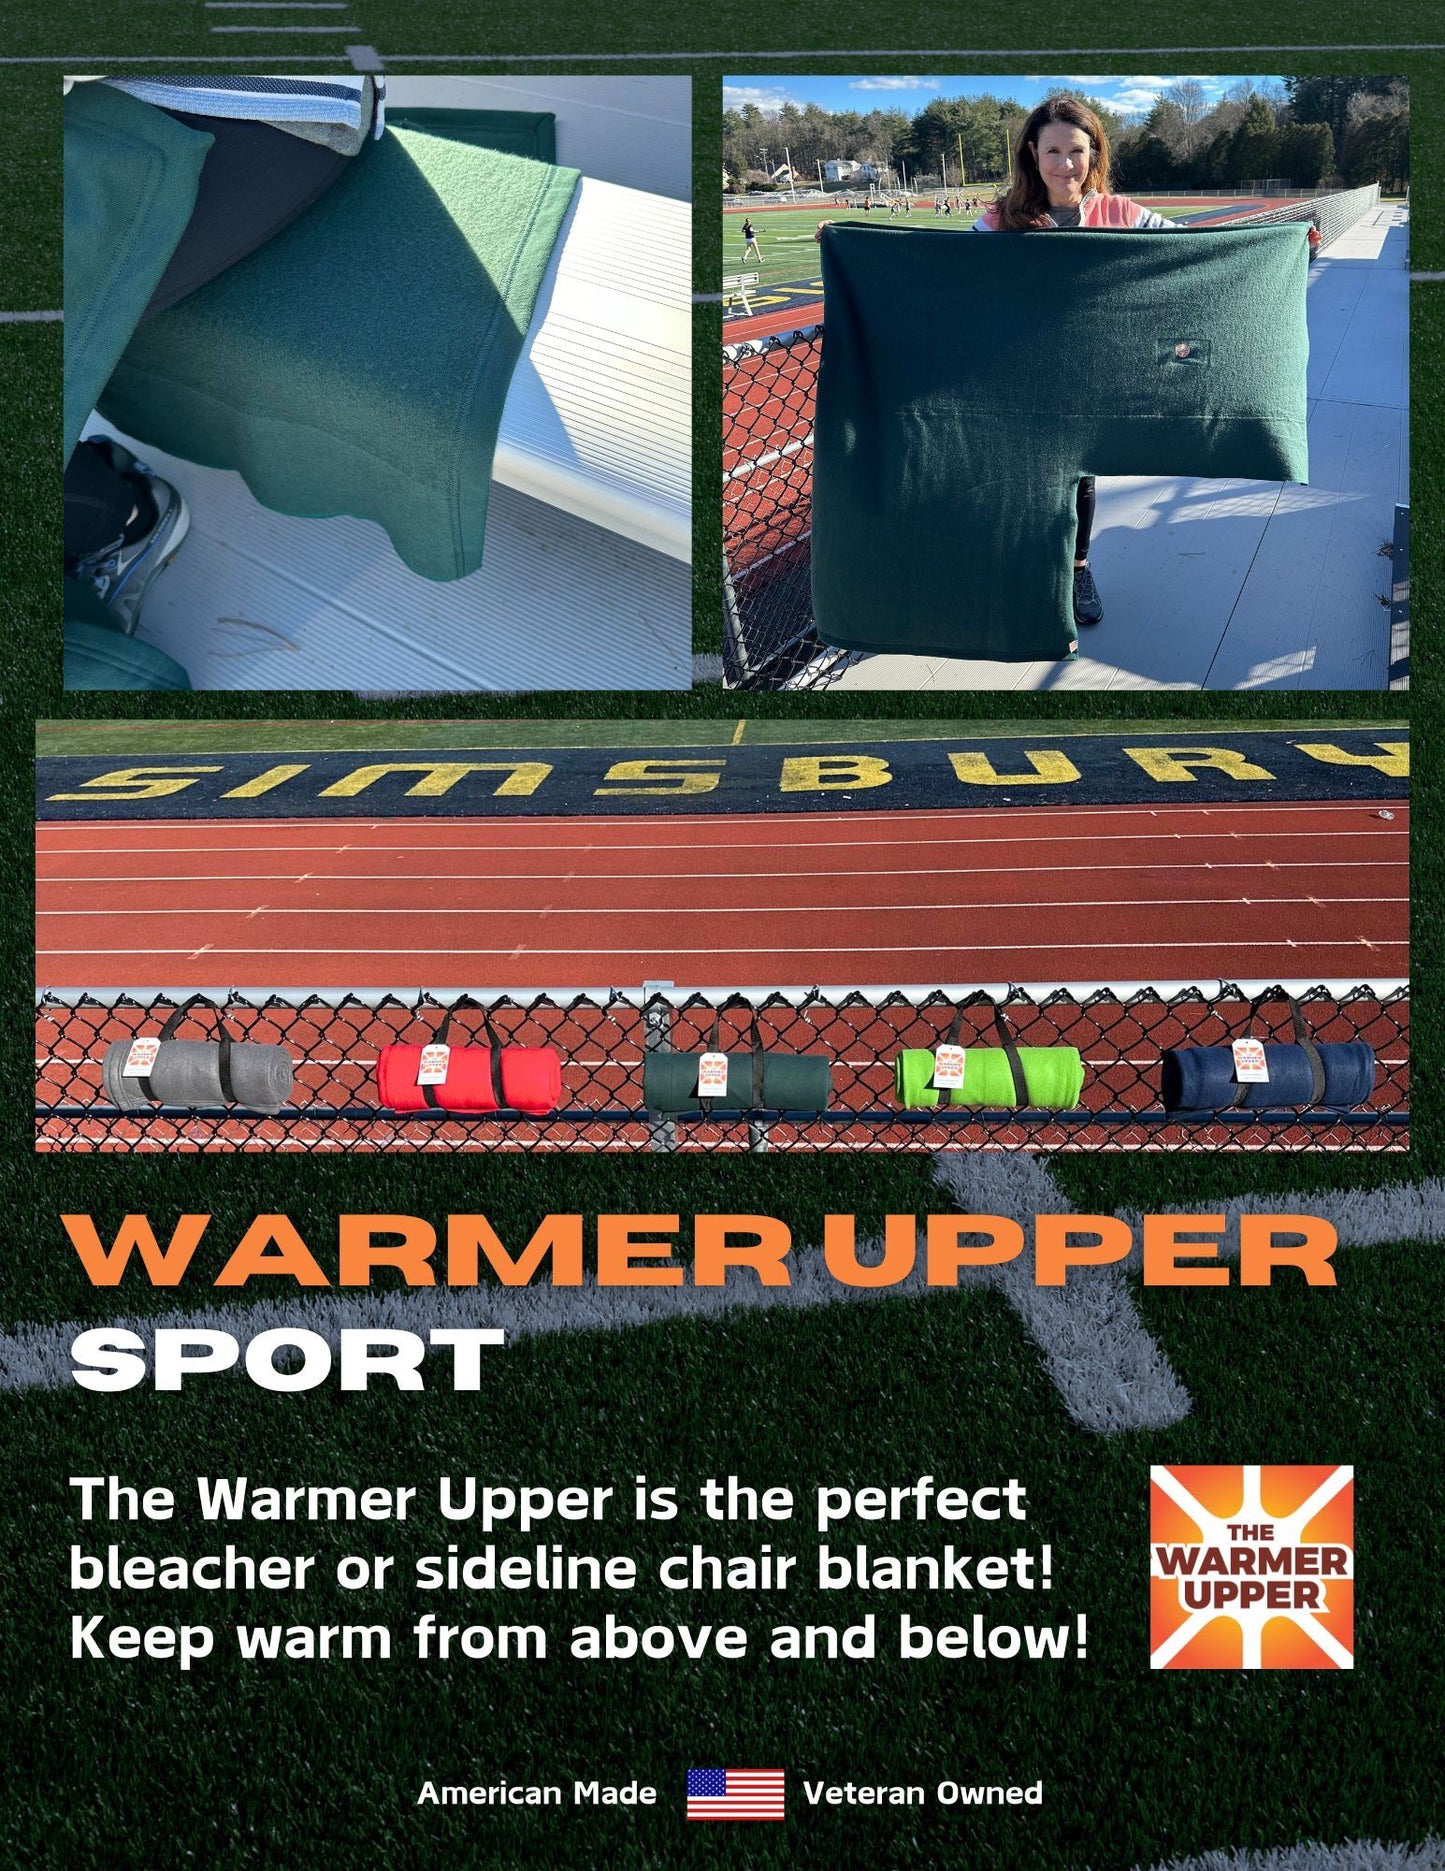 The Warmer Upper Sport